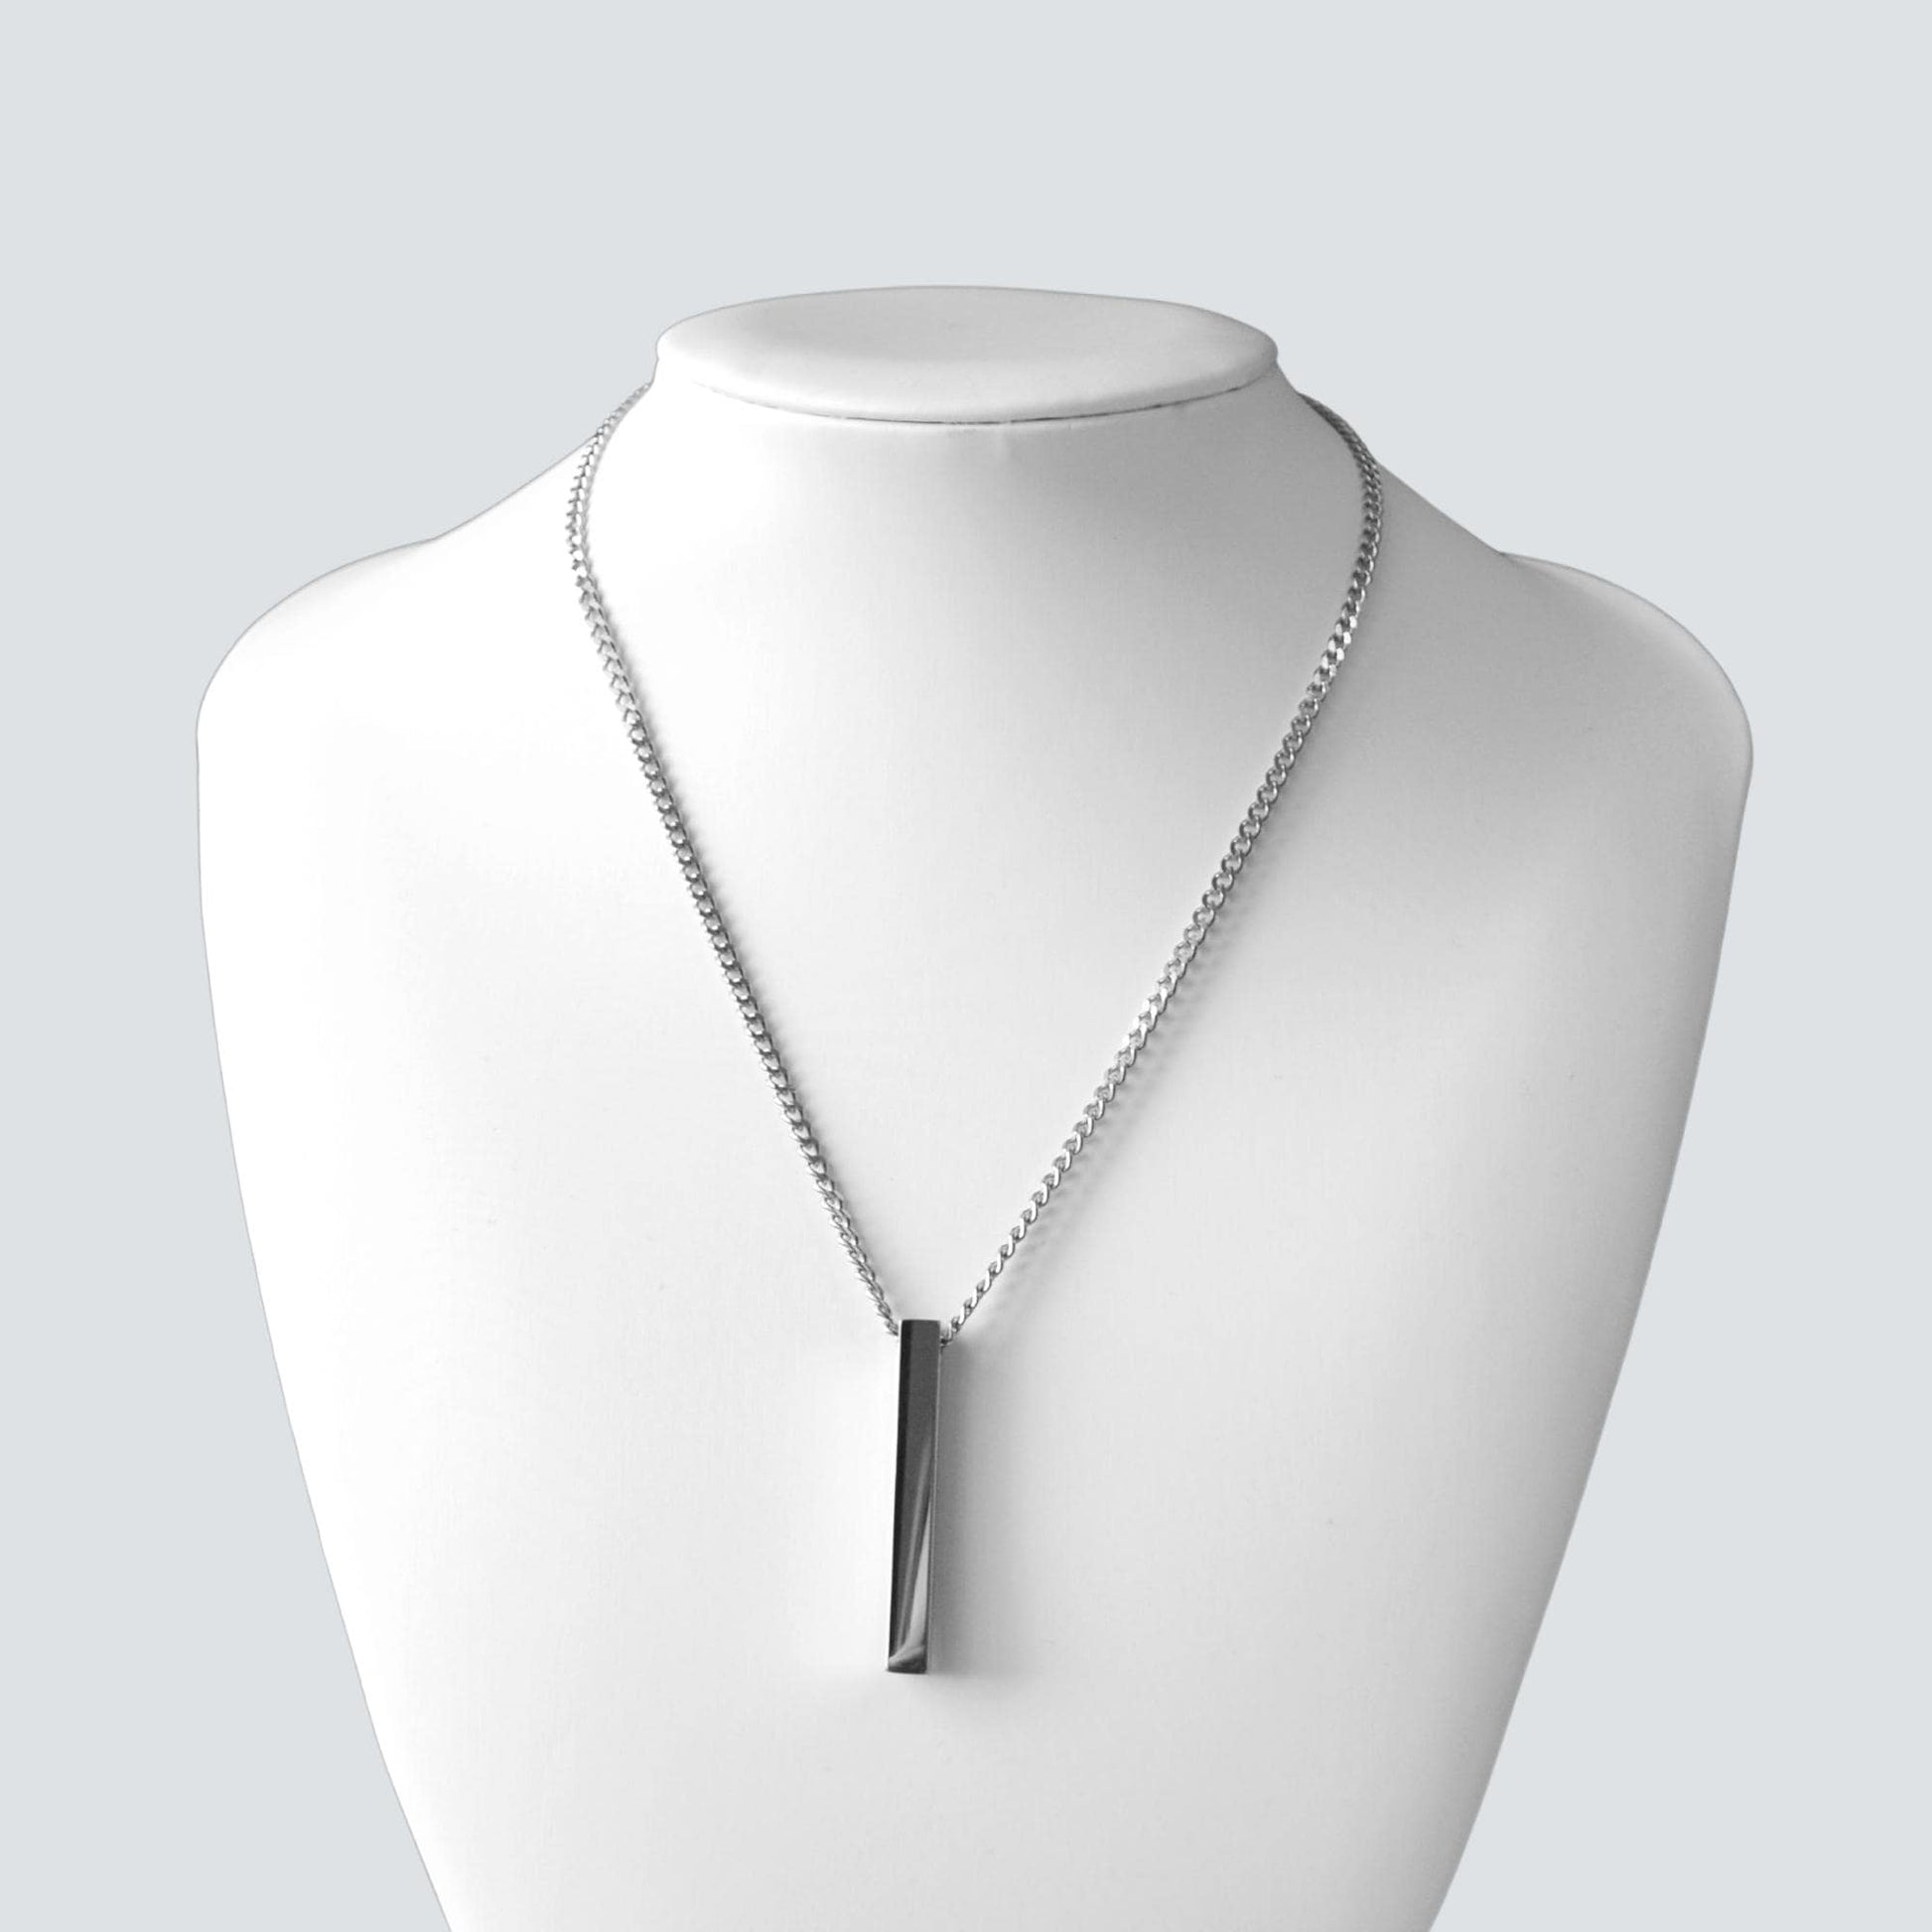 Silver Long Bar Pendant Necklace 3mm Curb Chain For Men - Necklace - Boutique Wear RENN